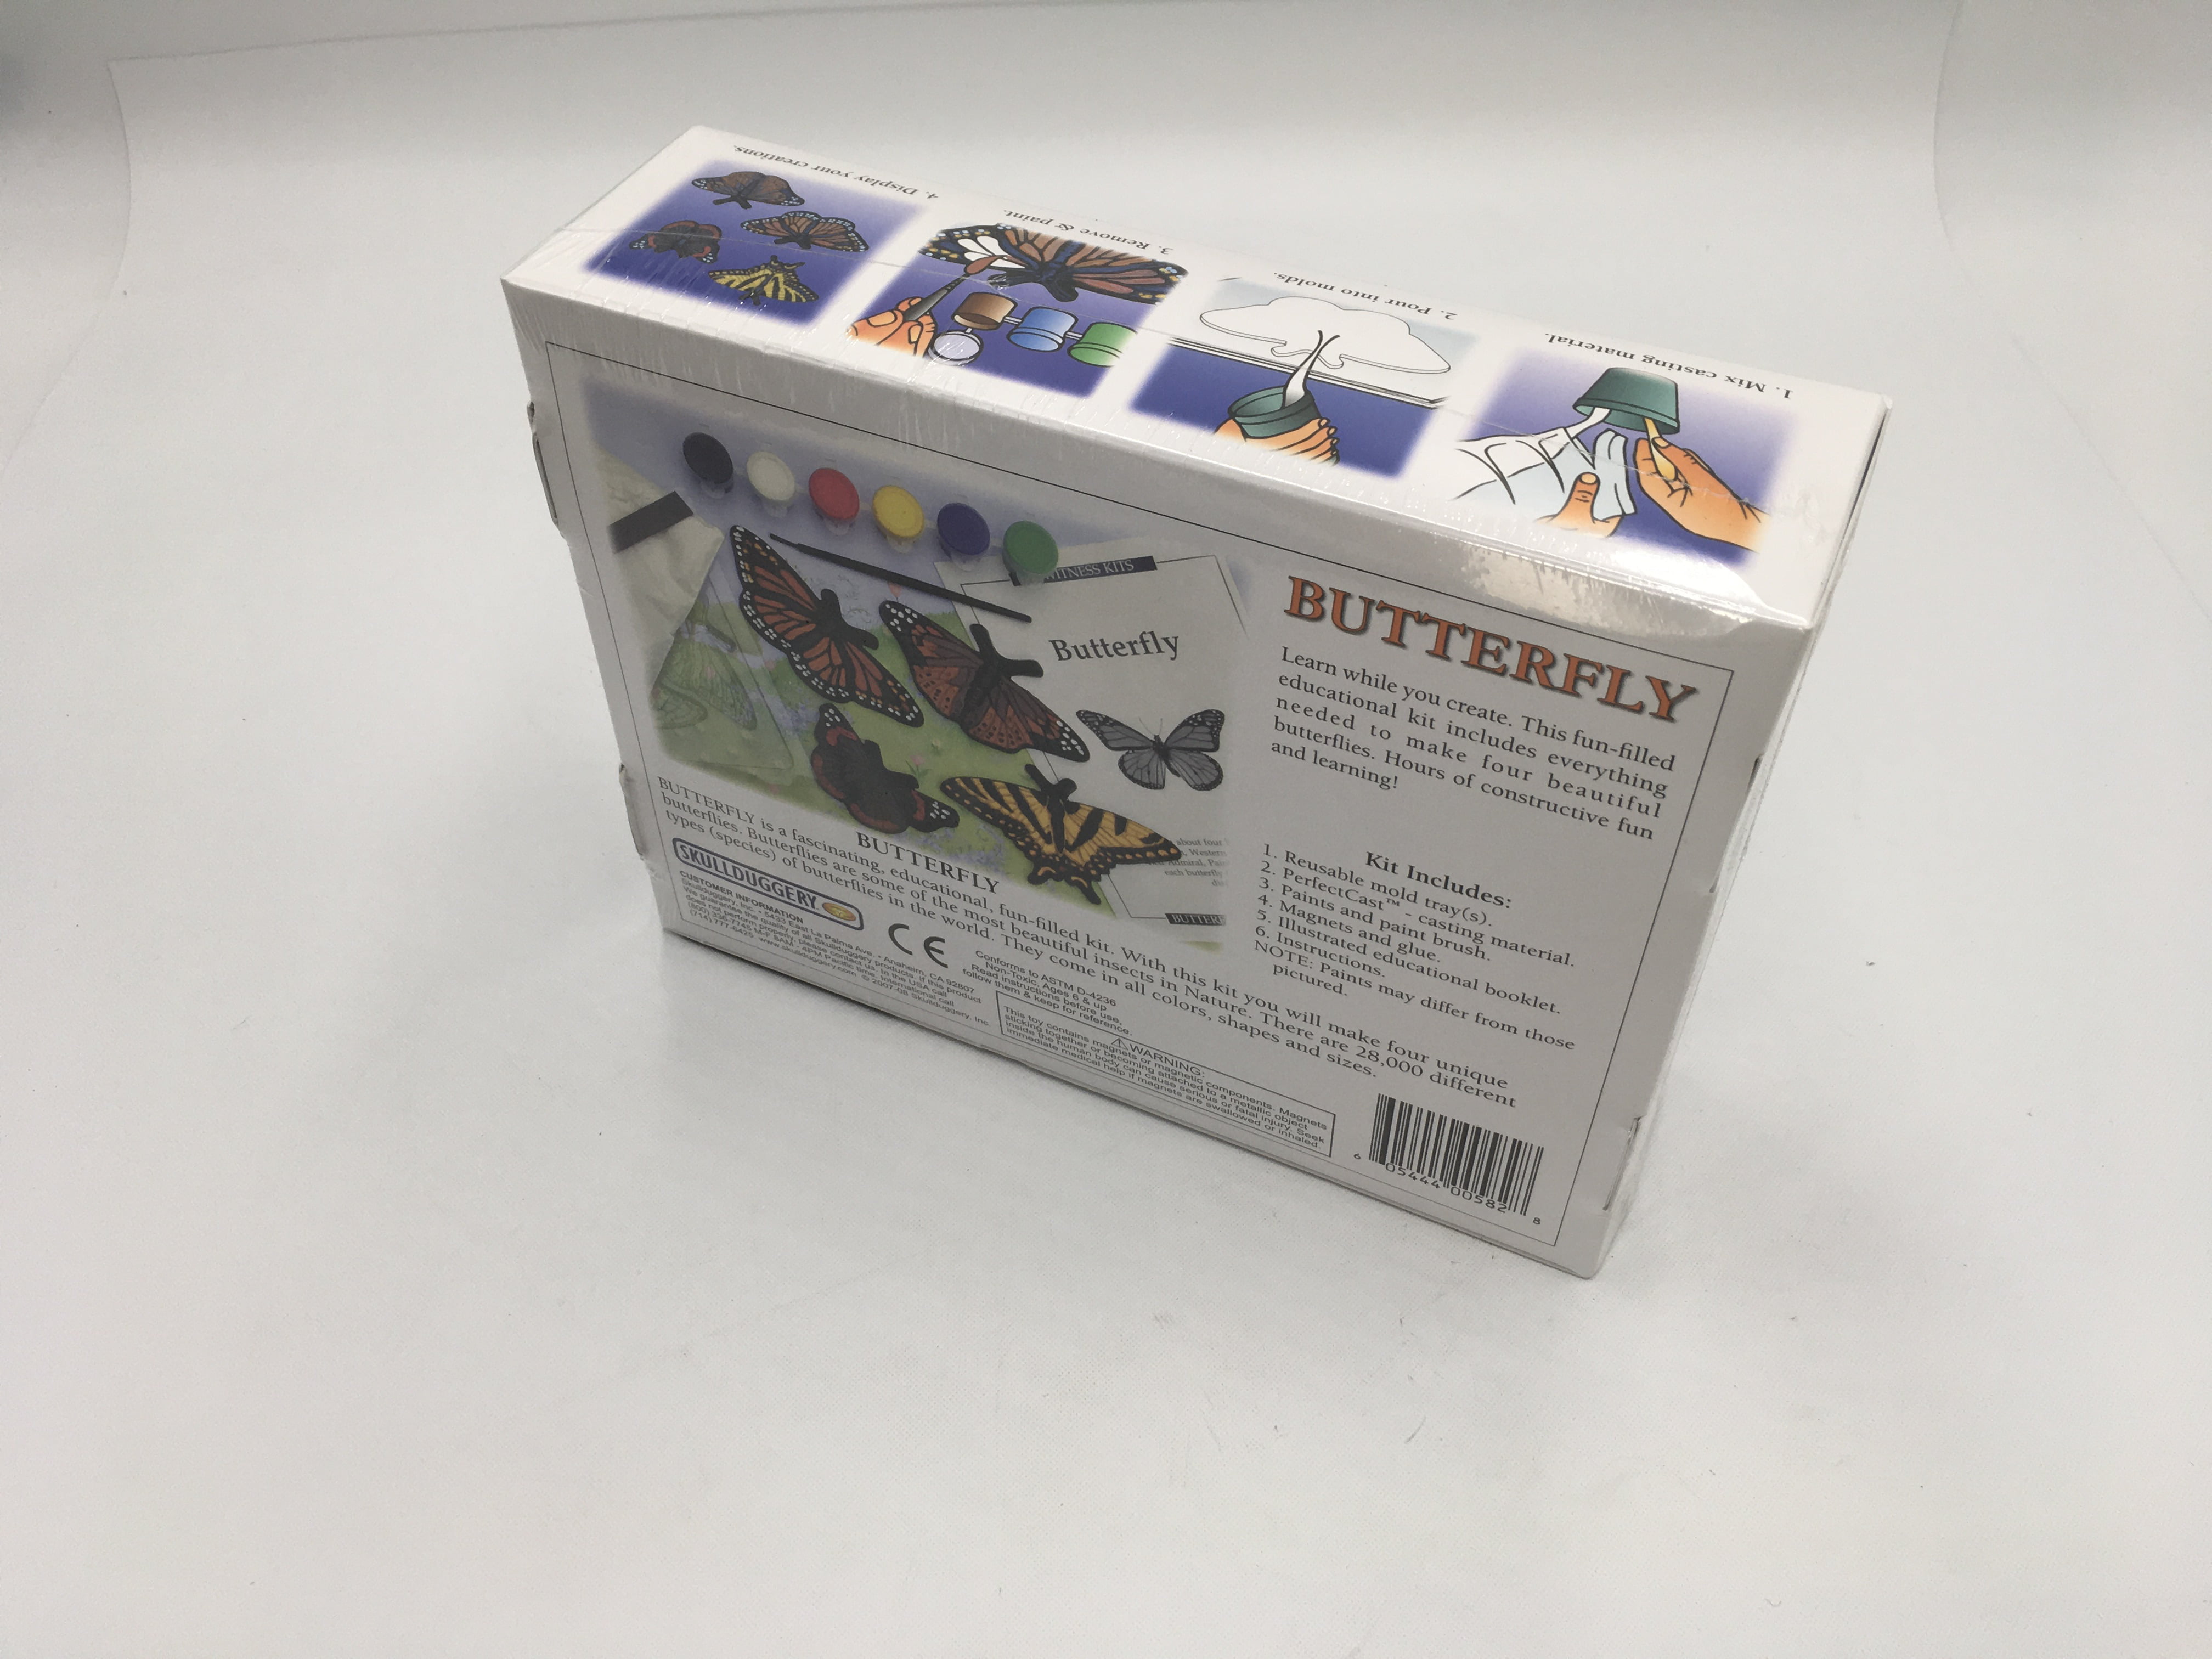 Skullduggery 0582 Butterfly Eyewitness Kit